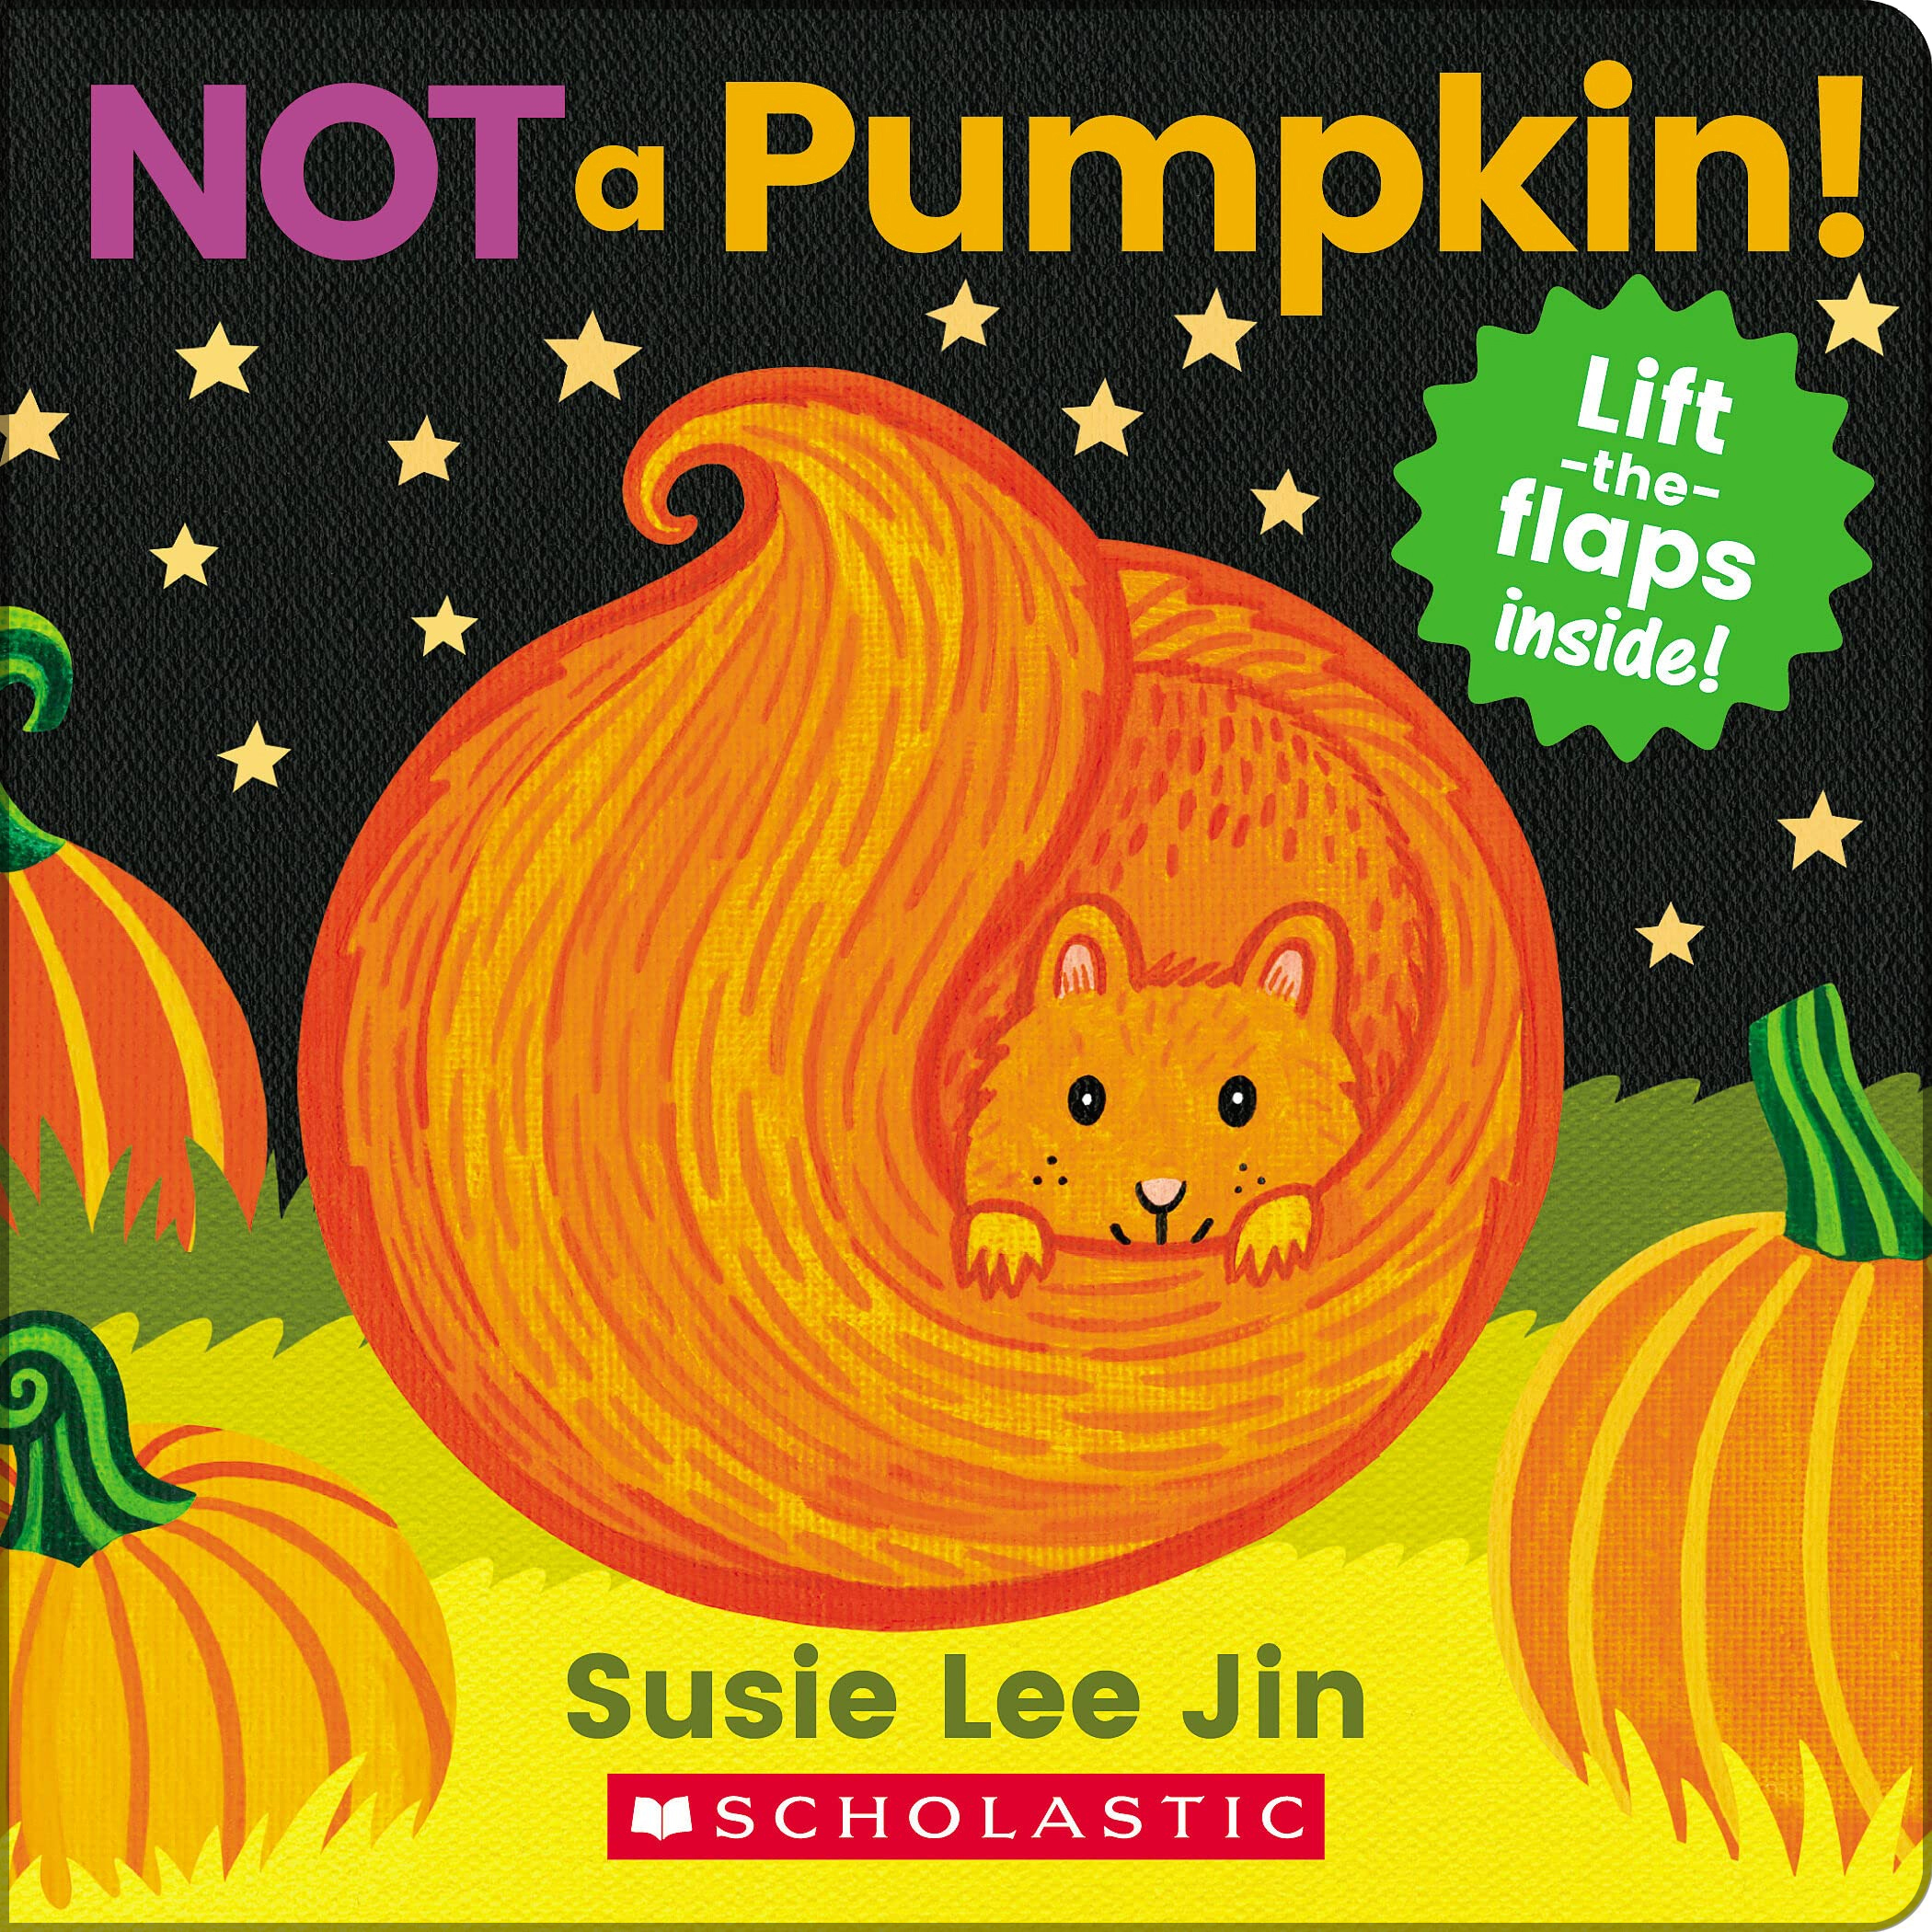 NOT a Pumpkin! by Susie Lee Jin